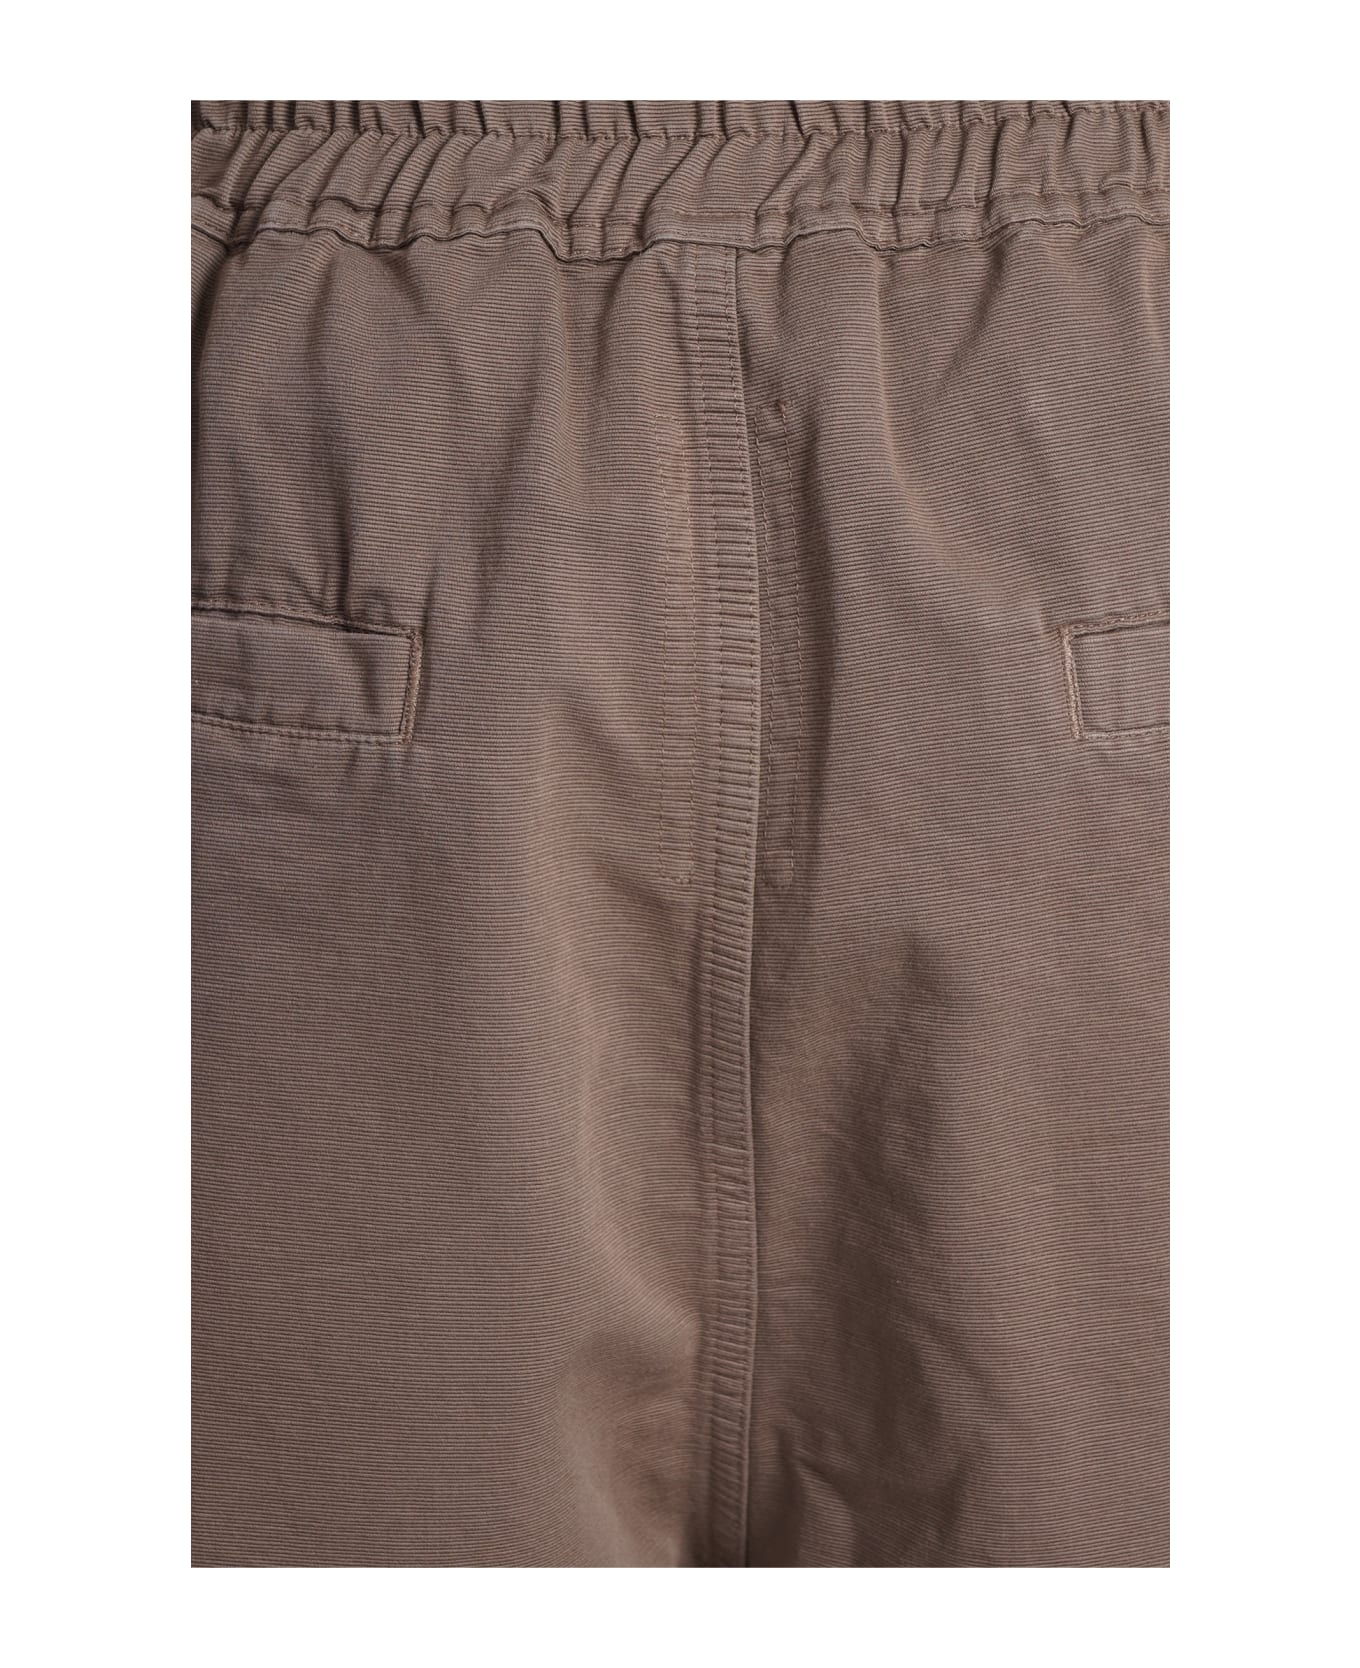 DRKSHDW Cargobela Shorts Shorts In Brown Cotton - brown